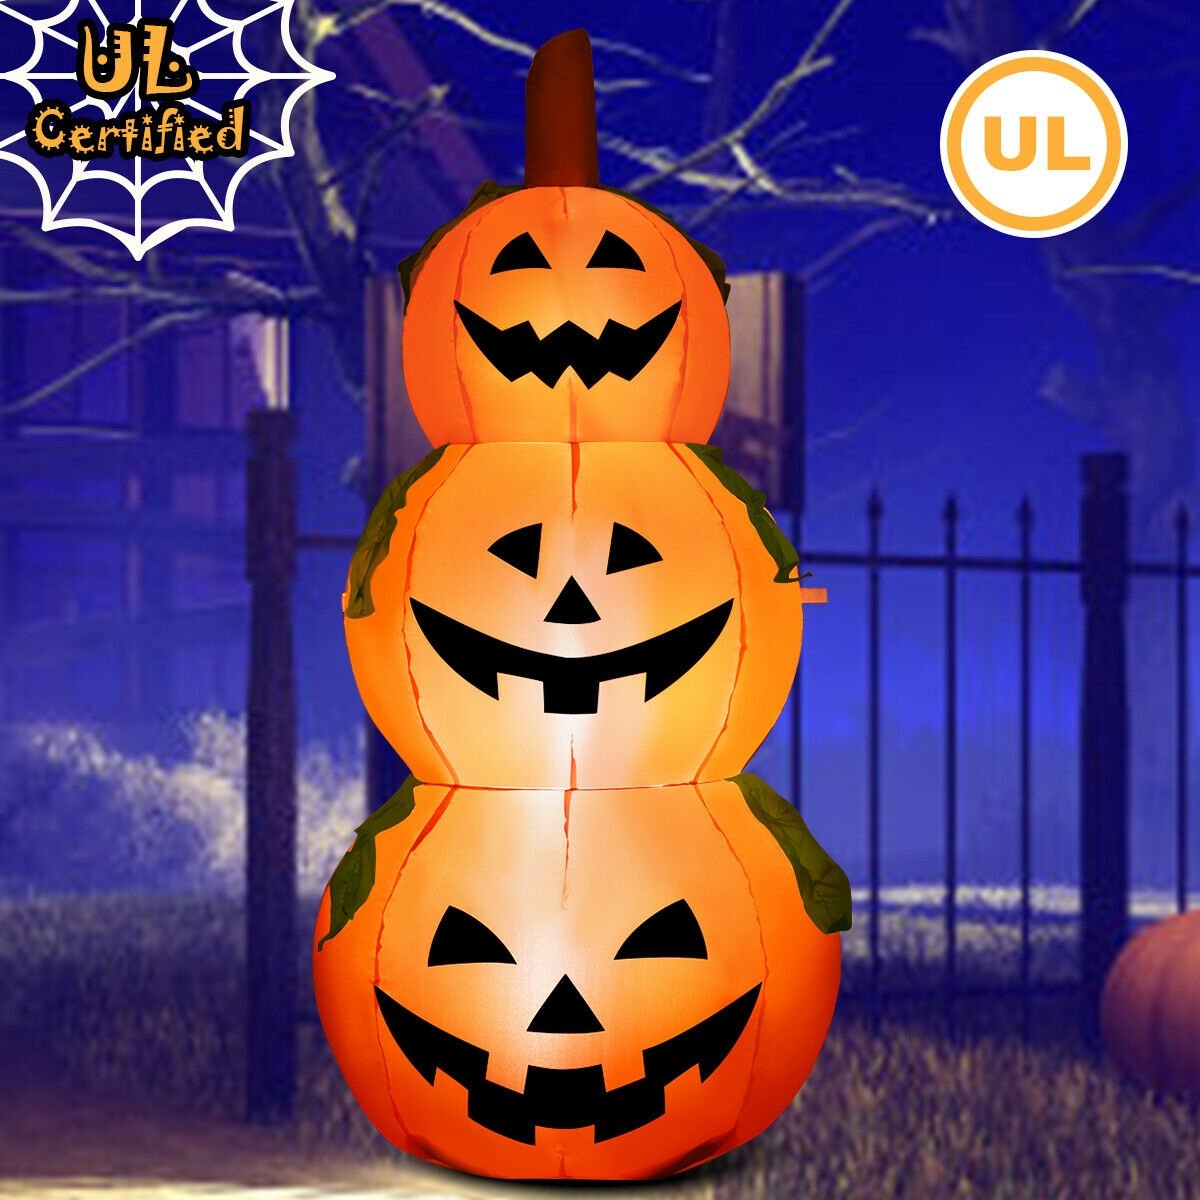 5.2 Feet Halloween Inflatable 3-Pumpkin Stack Ghost, Orange - Gallery Canada